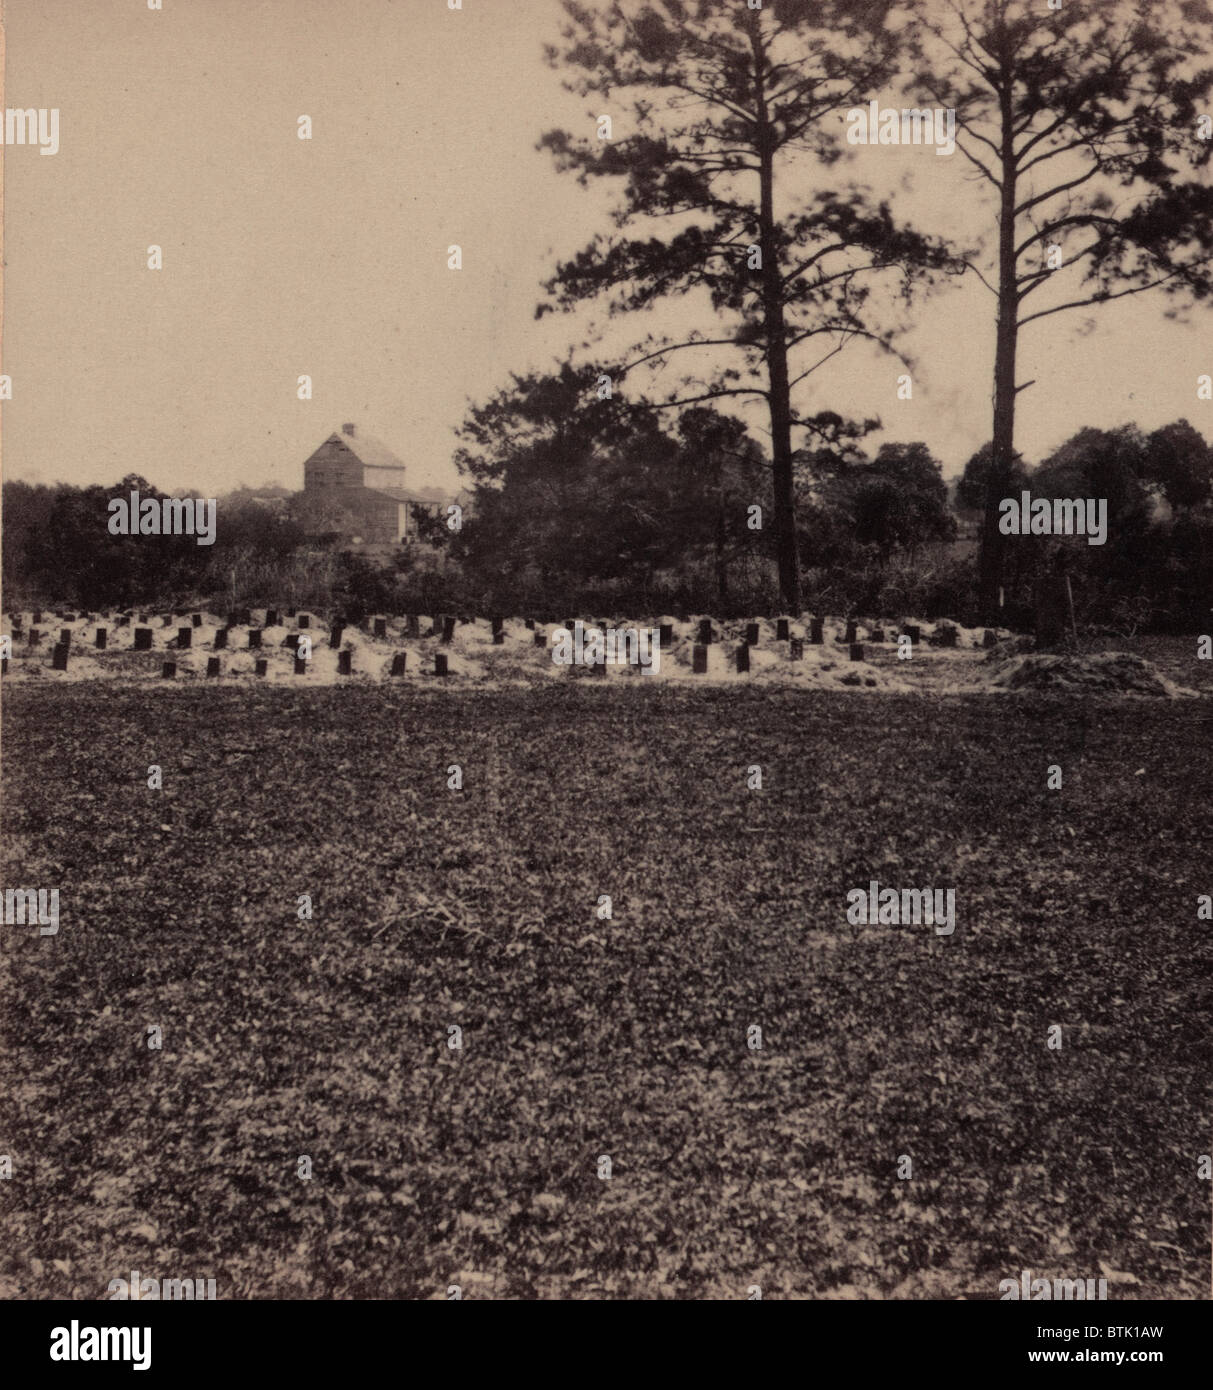 The Civil War, Union prisoners burying ground, Charleston, South Carolina, photograph by George N. Barnard, 1865. Stock Photo